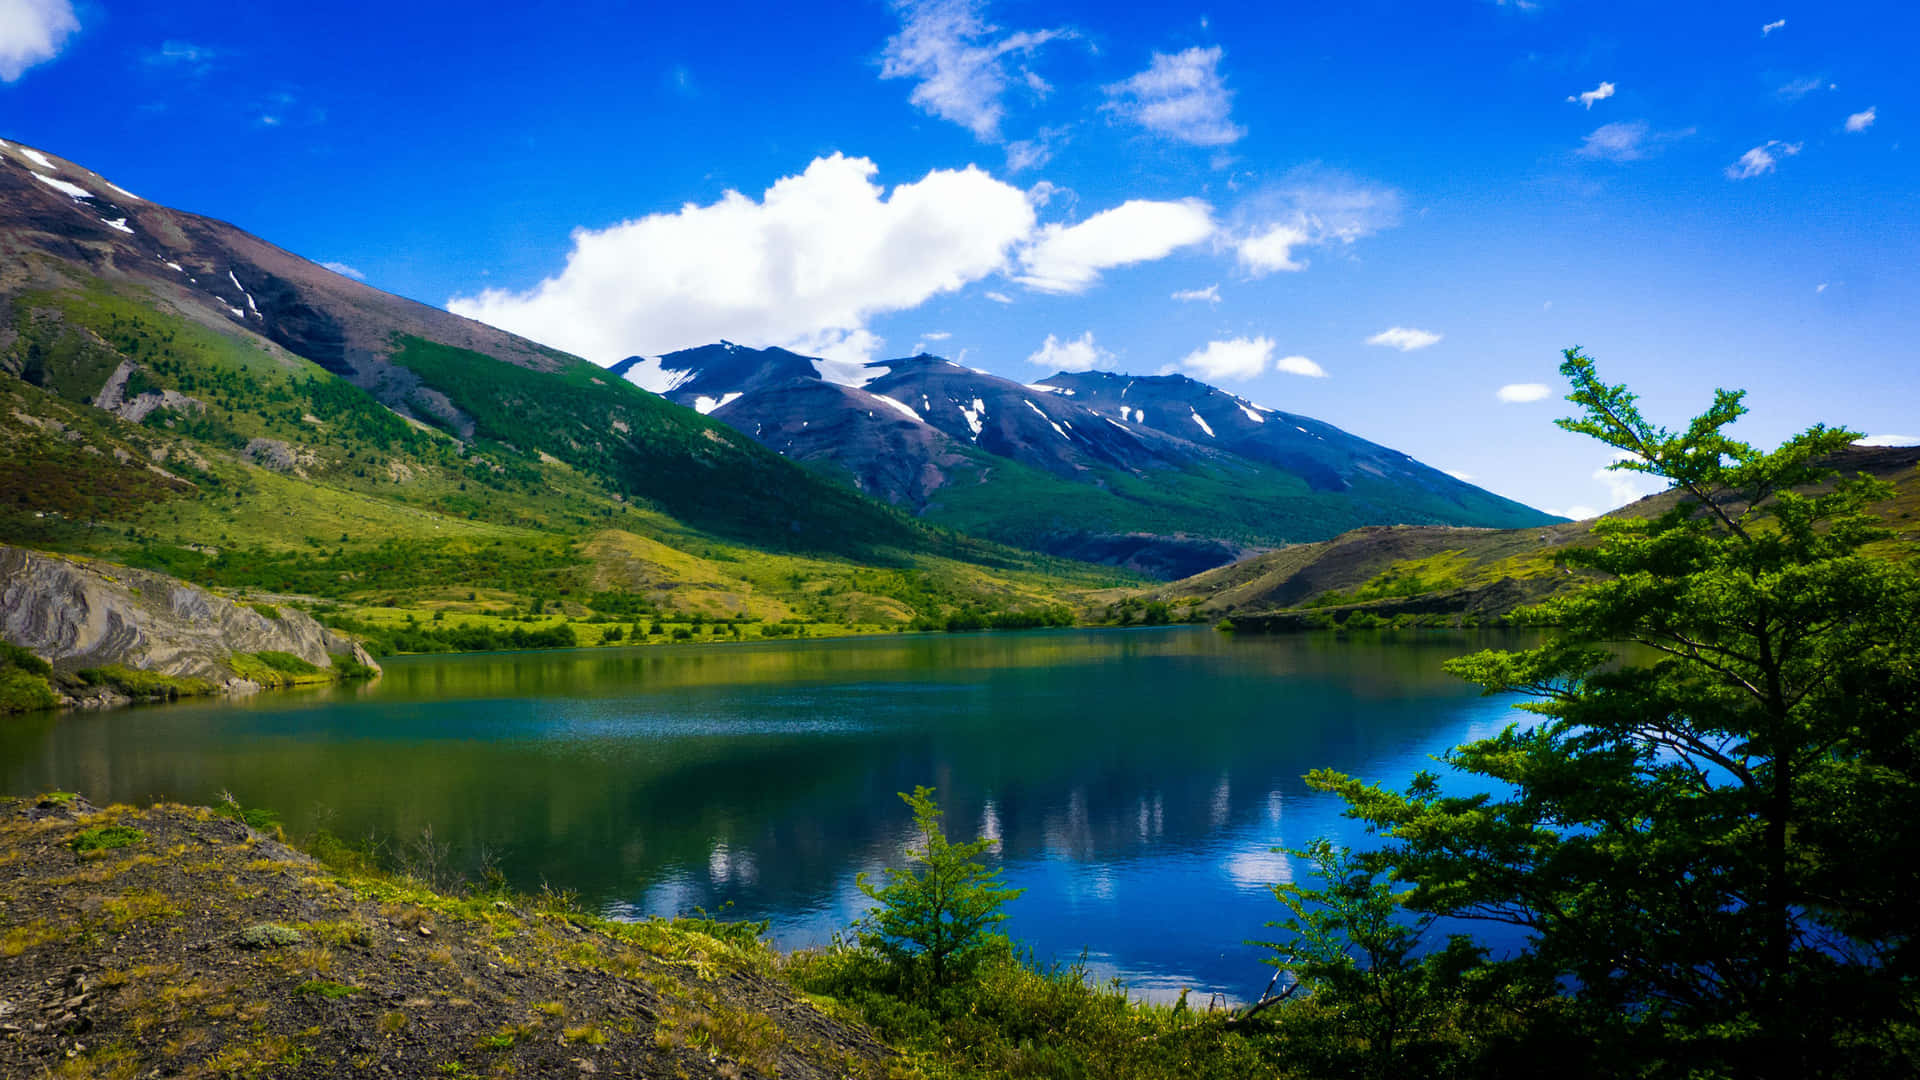 Take in the Splendor of this Beautiful Mountain Lake Wallpaper